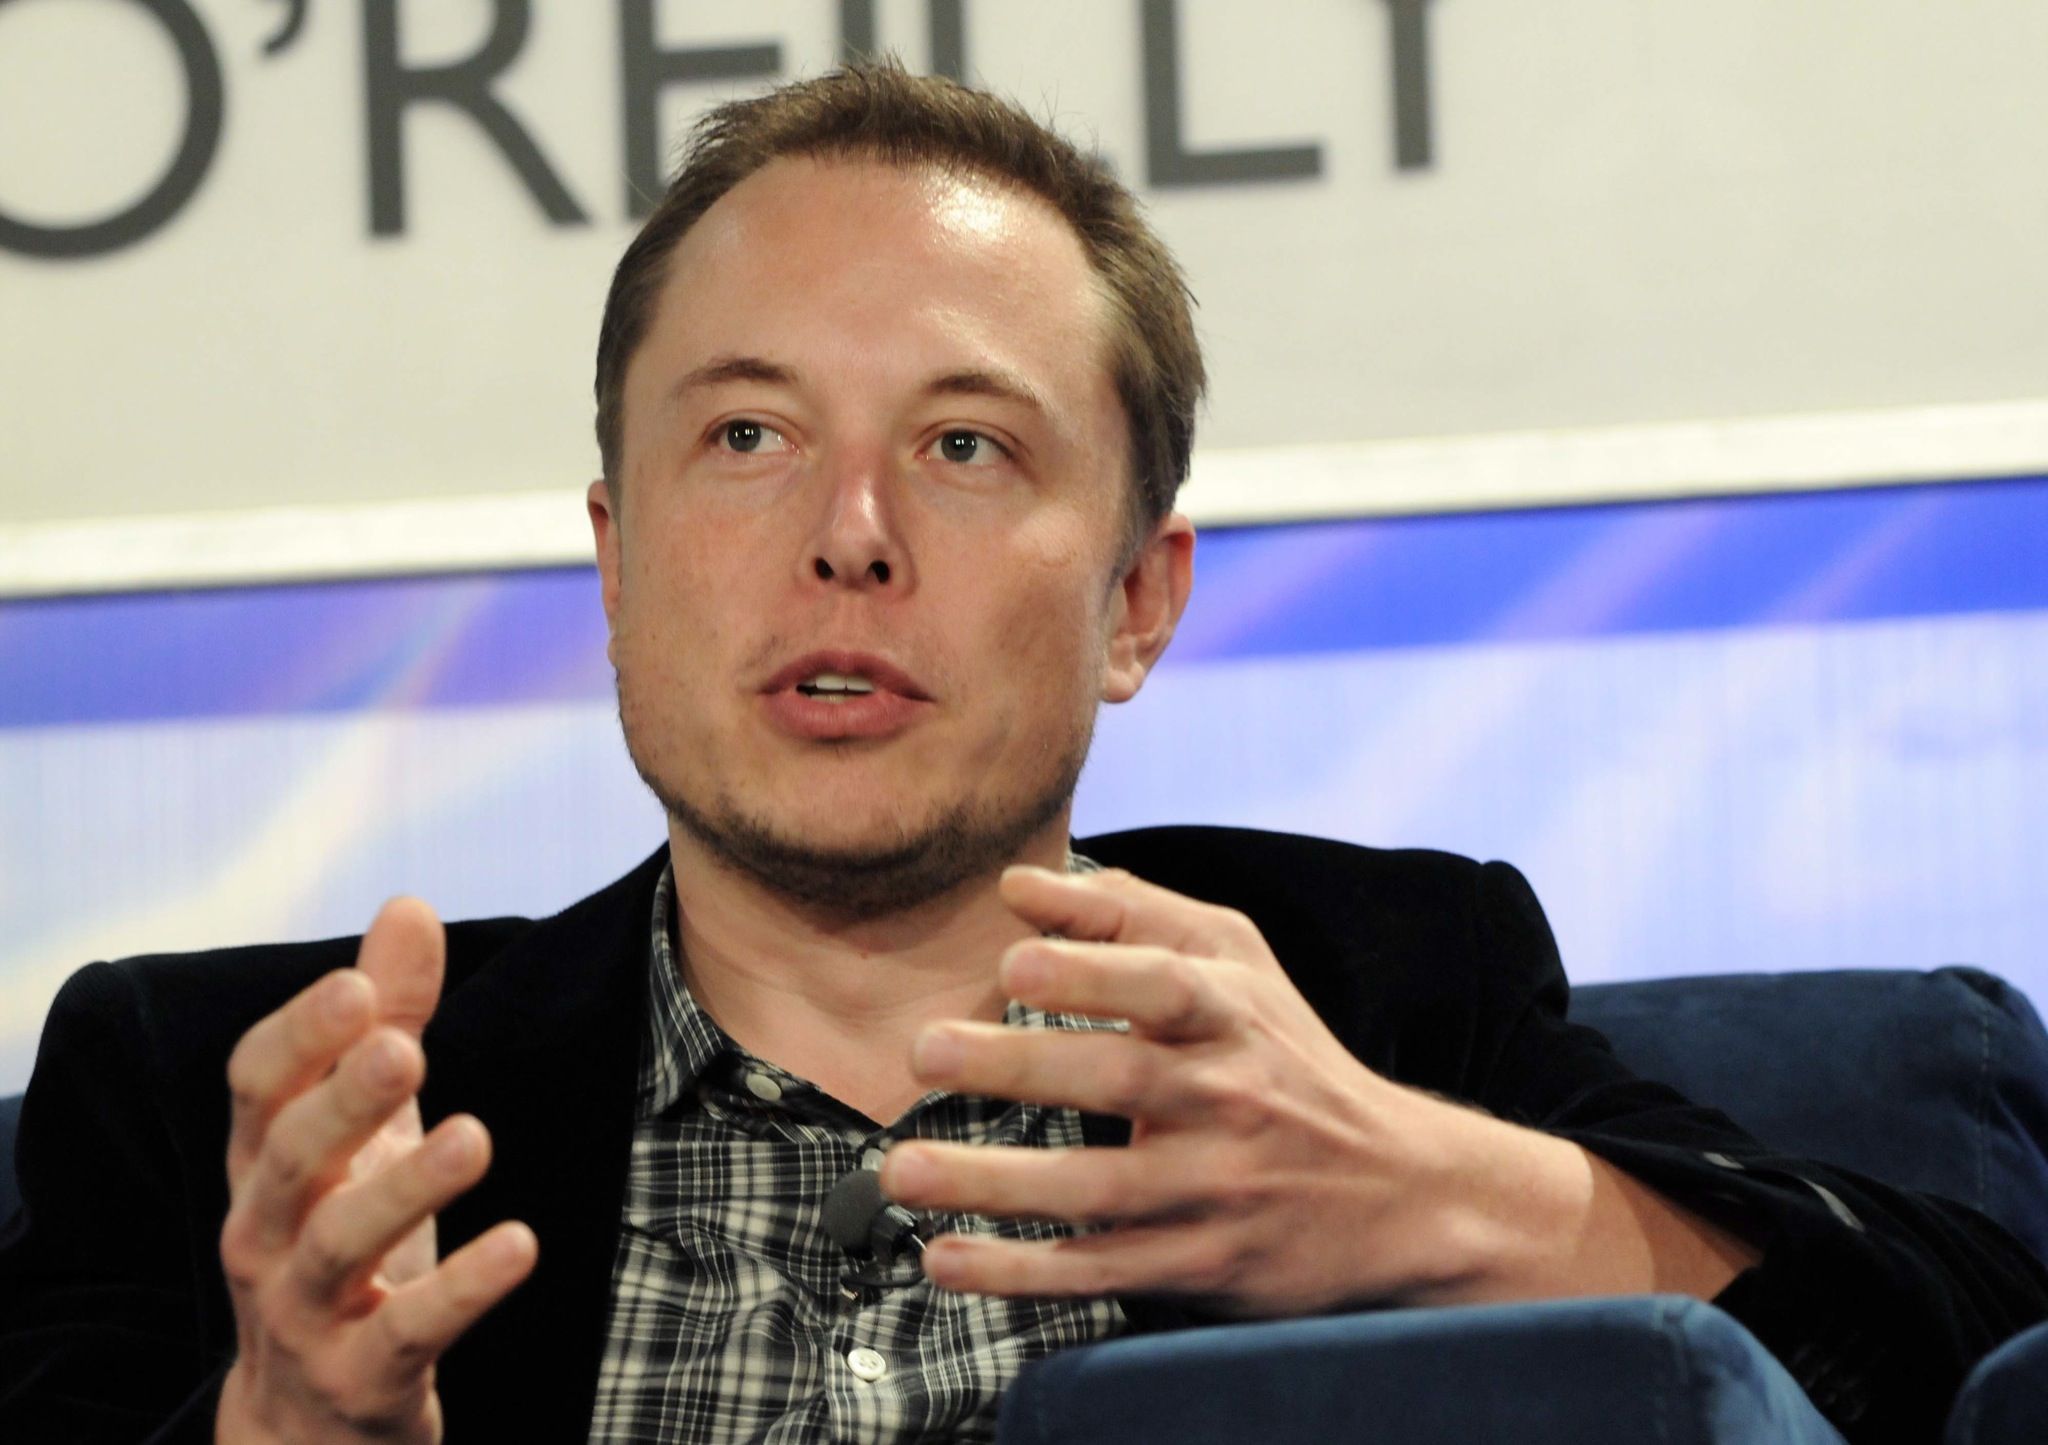 Carlsberg will no longer advertise on Twitter after Elon Musk’s buyout